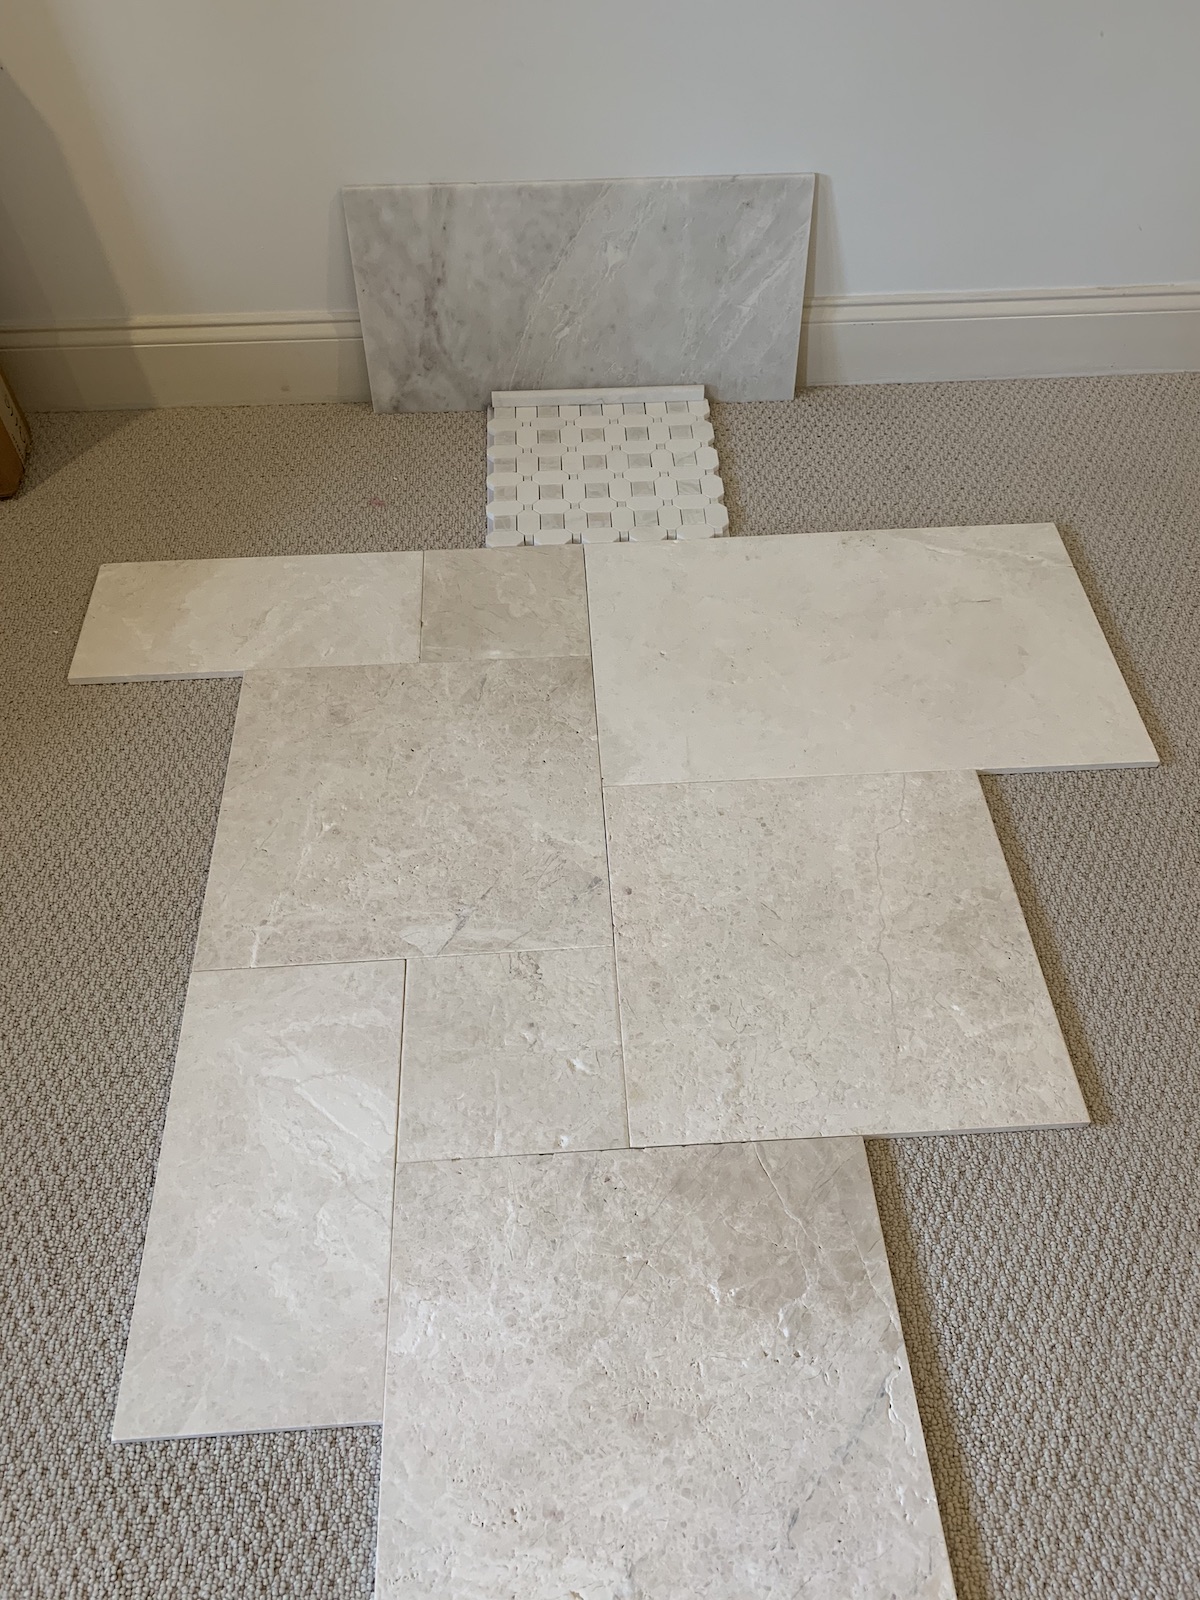 master-bathroom-tile-floor-ideas Our Master Bathroom Ideas | Interior Design, Sources and Inspiration